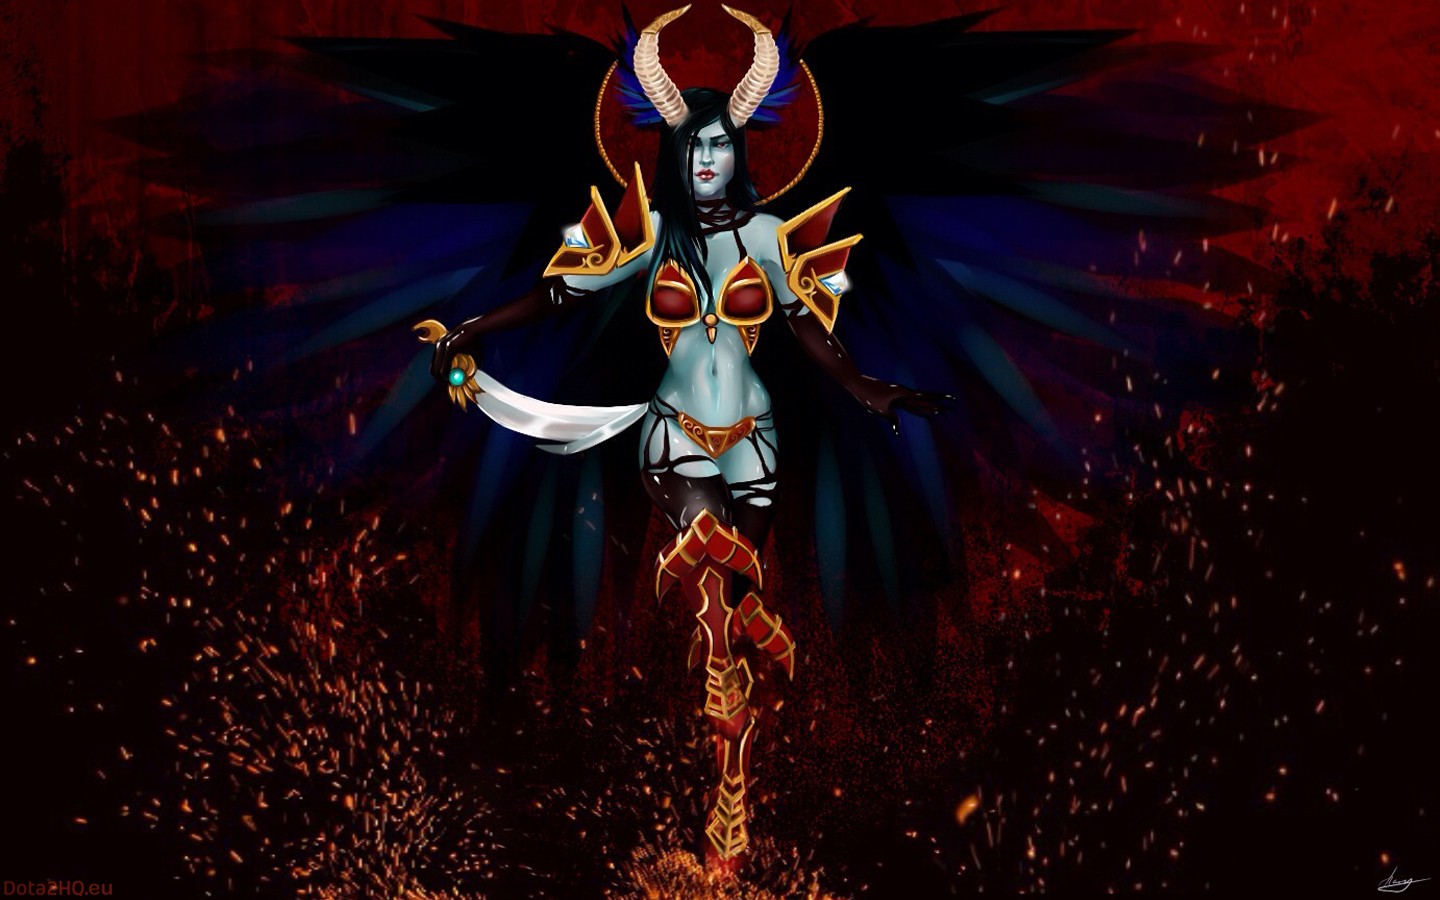 General 1440x900 Dota Queen of Pain succubus horns video game art fantasy art fantasy girl belly dark hair standing PC gaming Dota 2